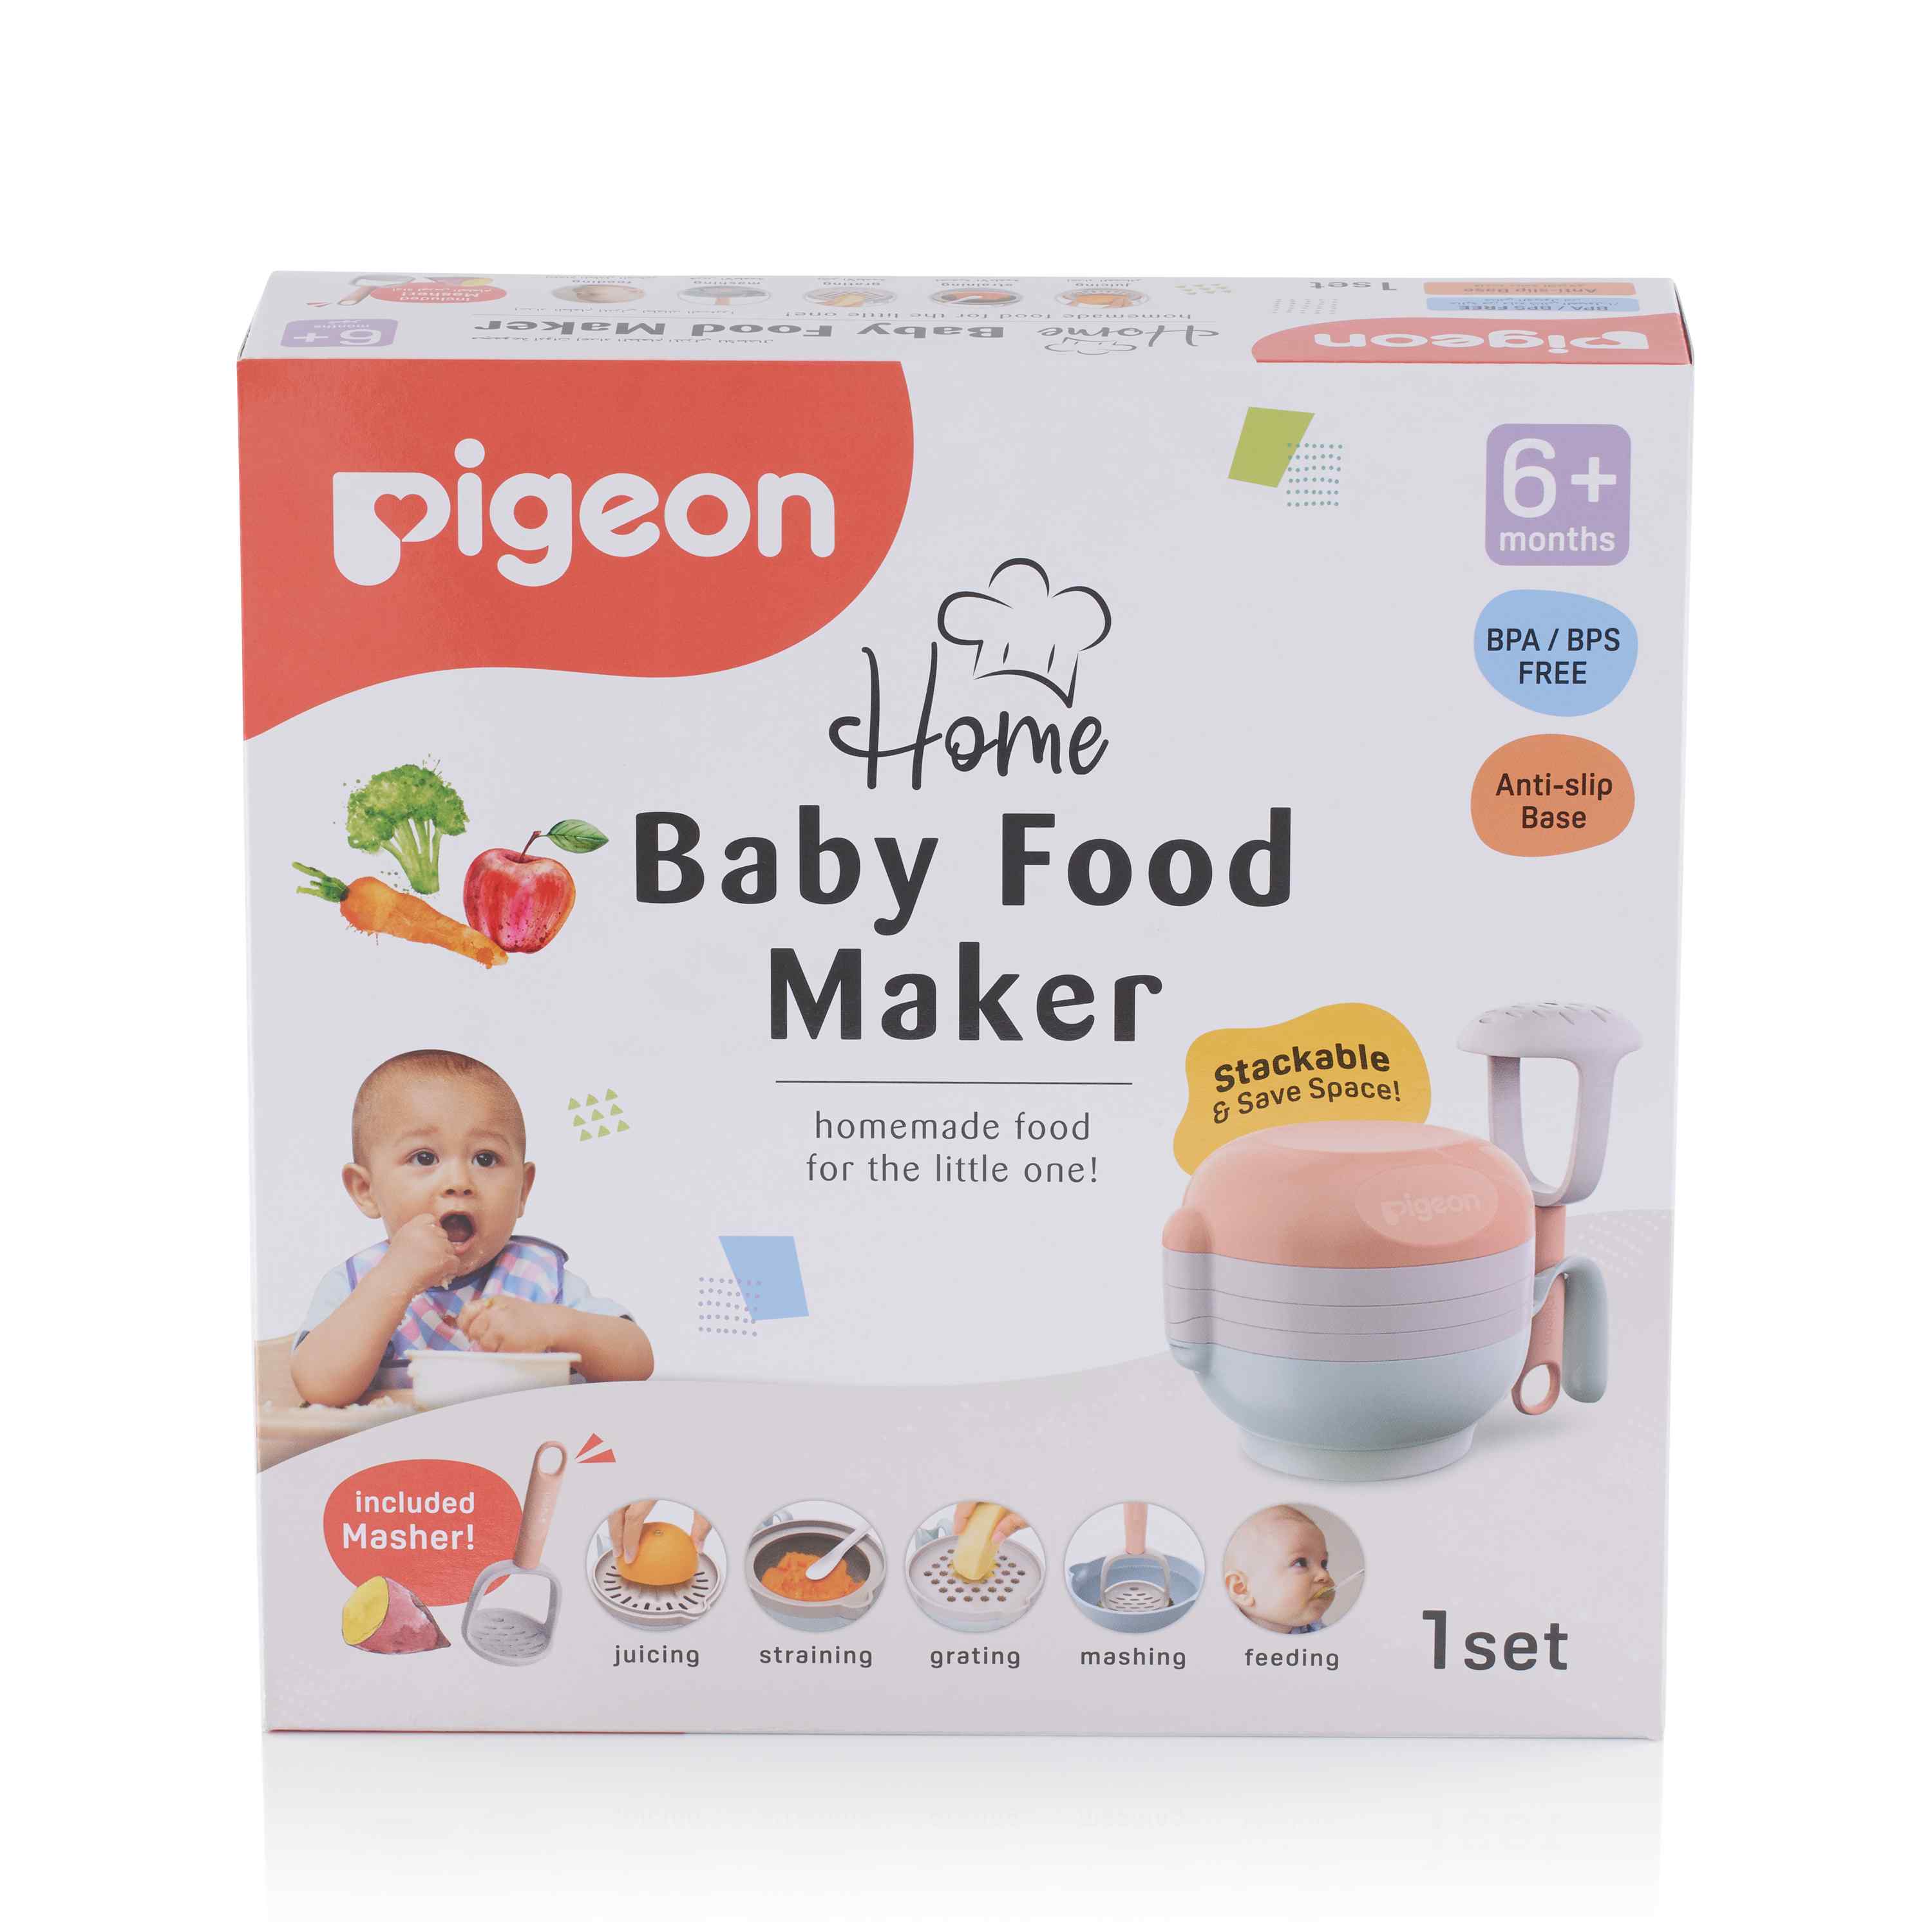 baby-fair Pigeon (D326) Home Baby Food Maker (PG-78416)